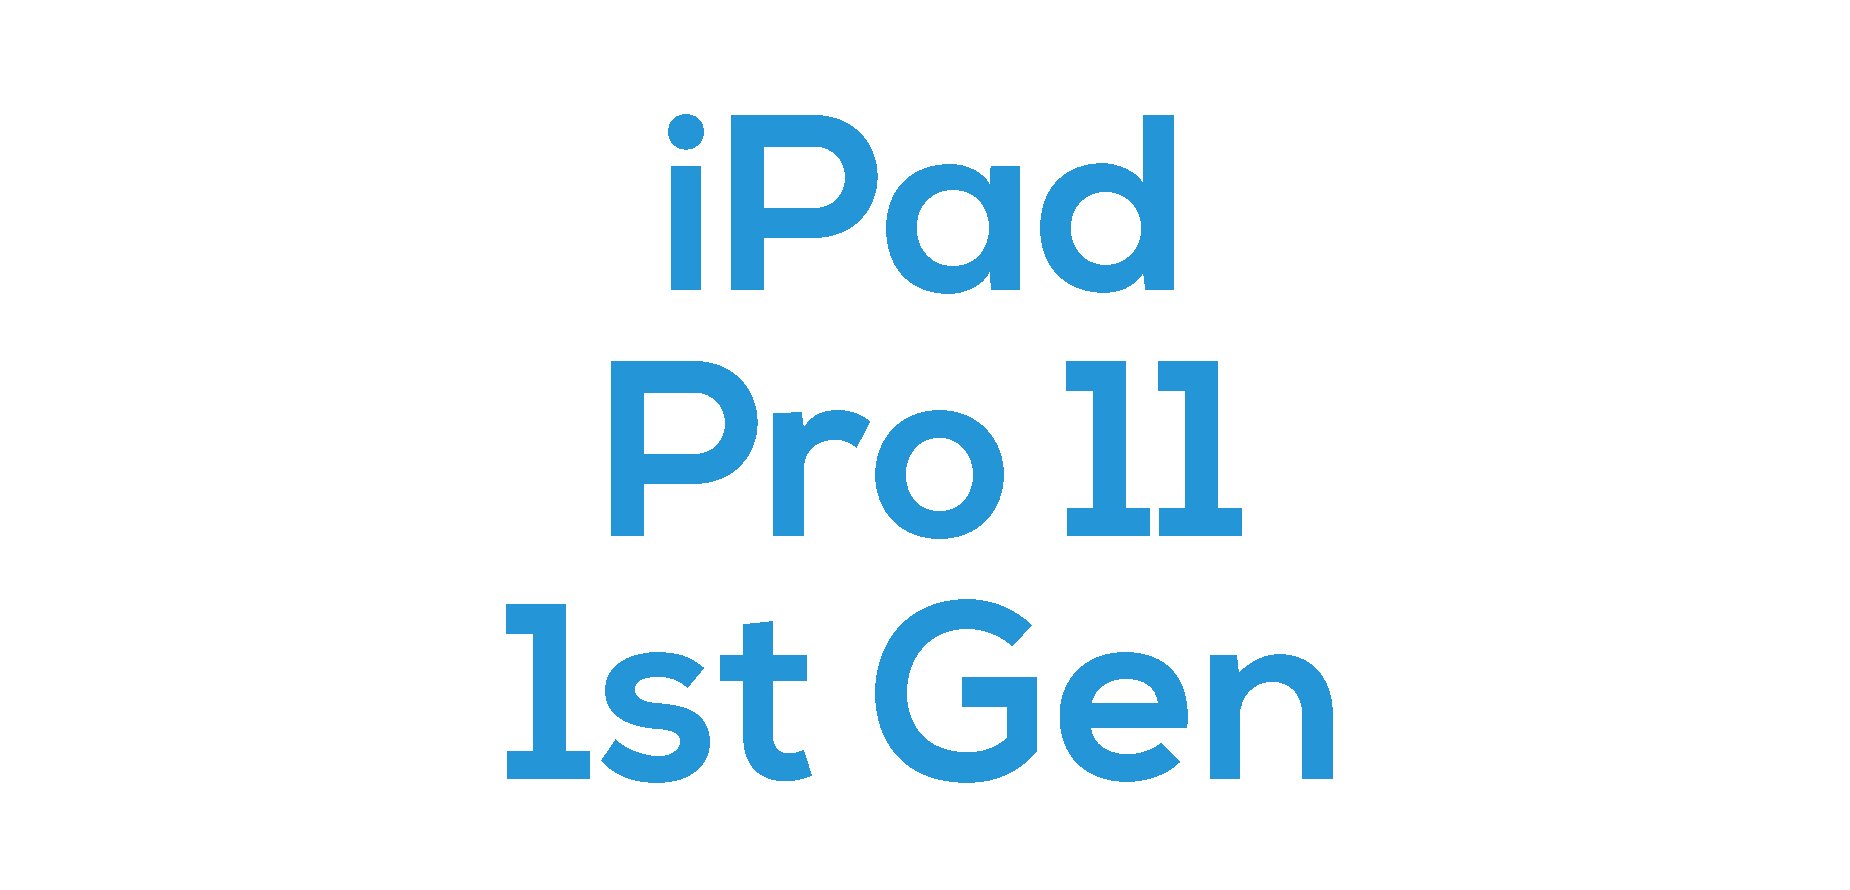 iPad Pro 11 (1st Gen)